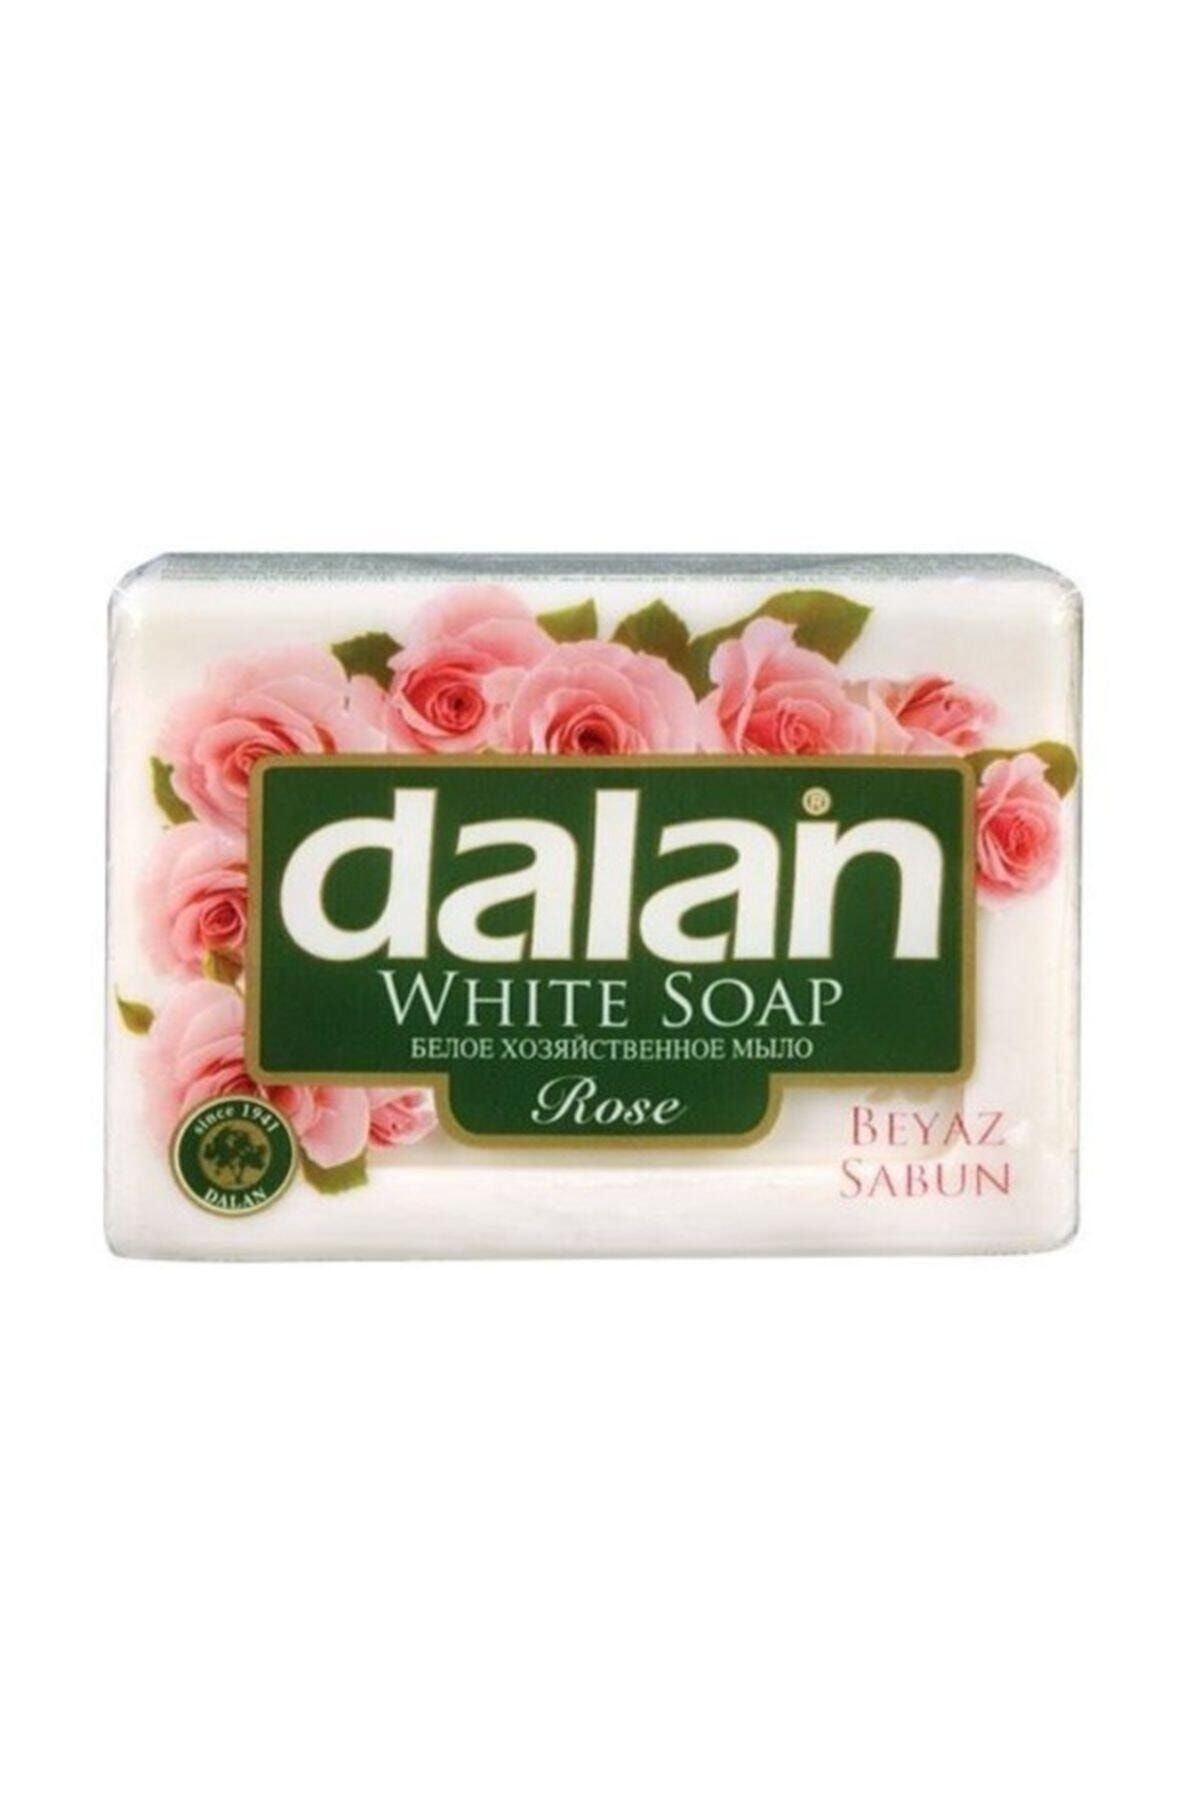 Dalan Beyaz Sabun Gül 4x150 gr